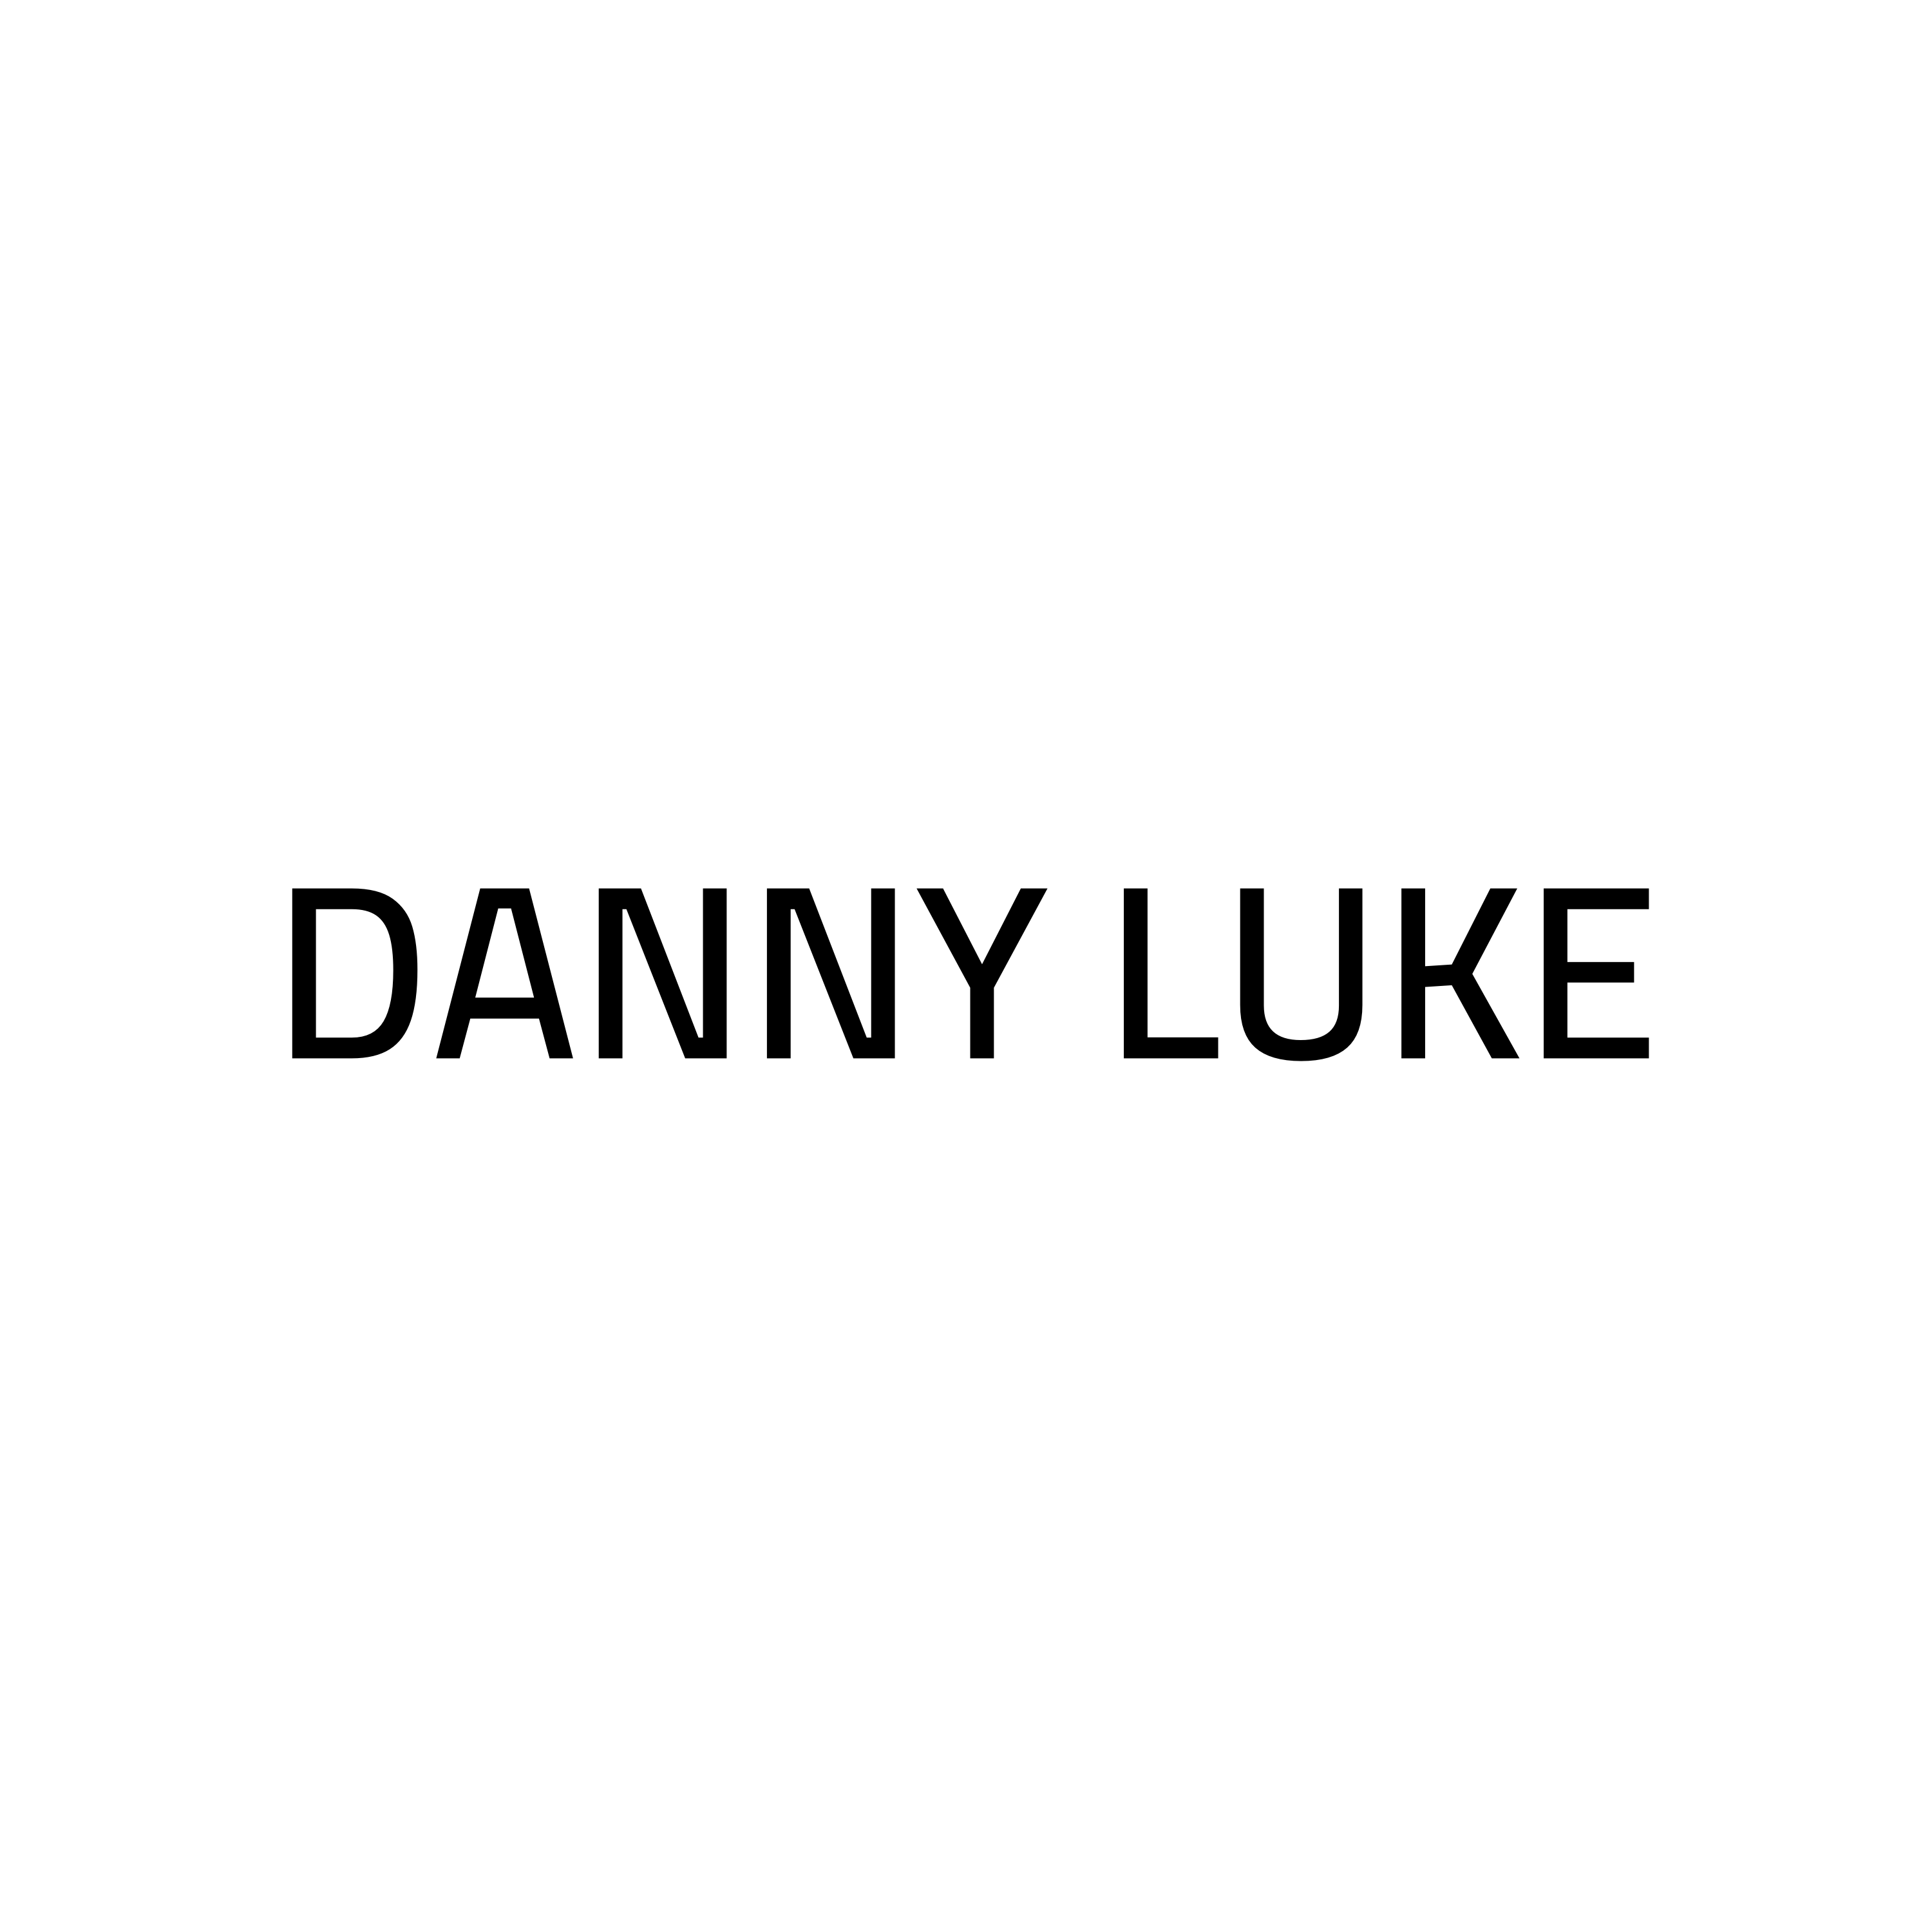 DANNY LUKE